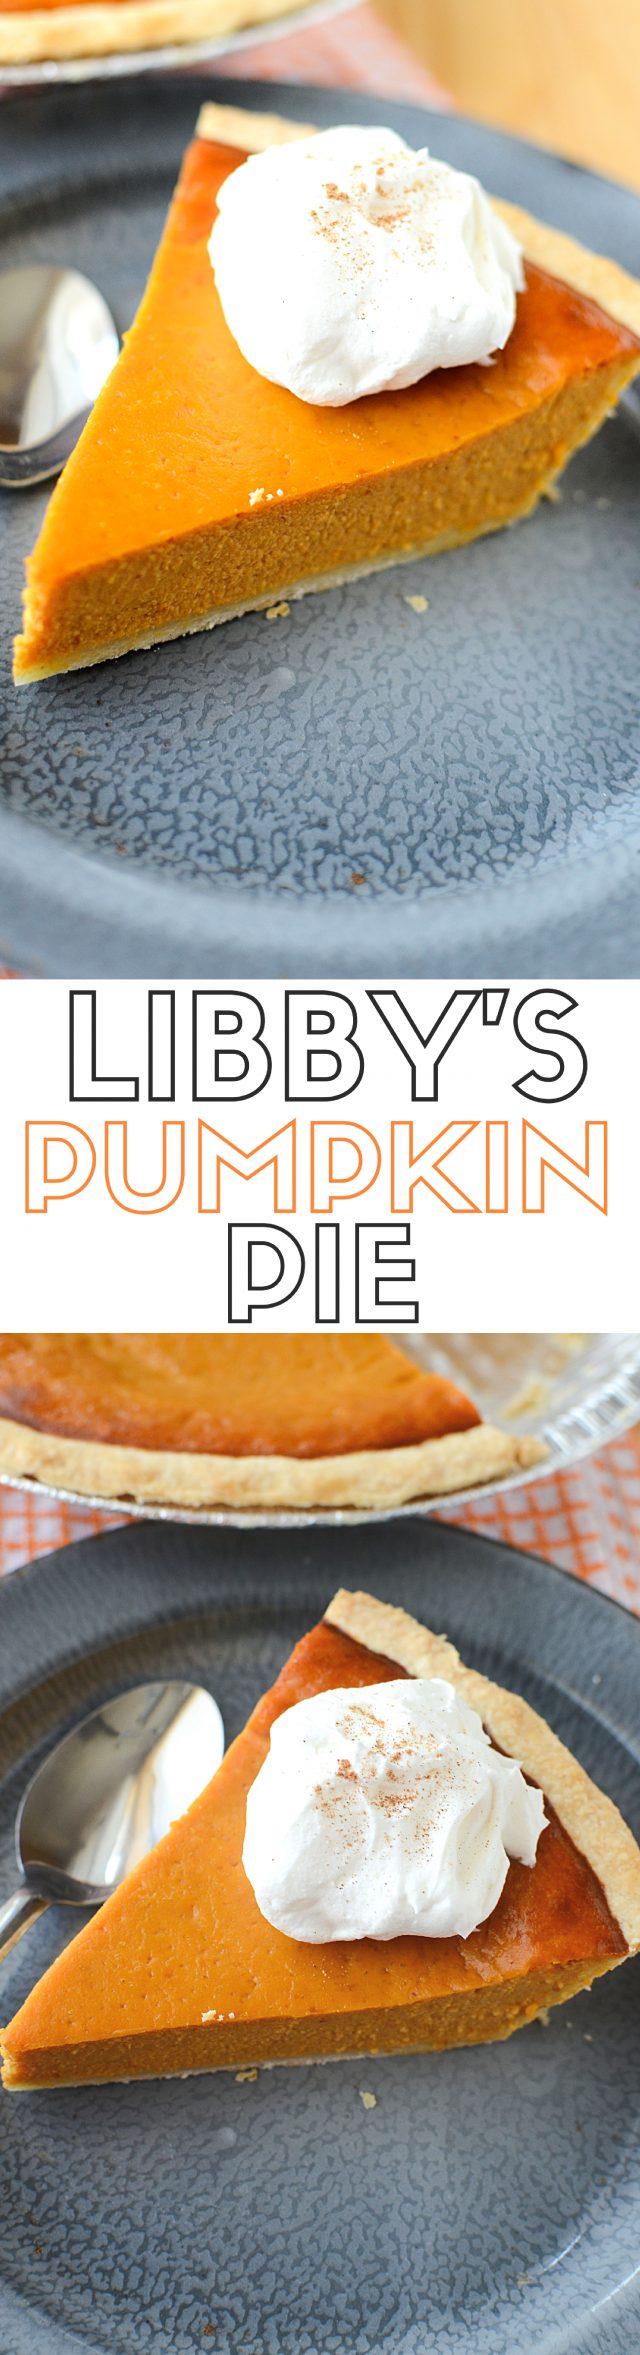 LIBBY'S Famous Pumpkin Pie Recipe